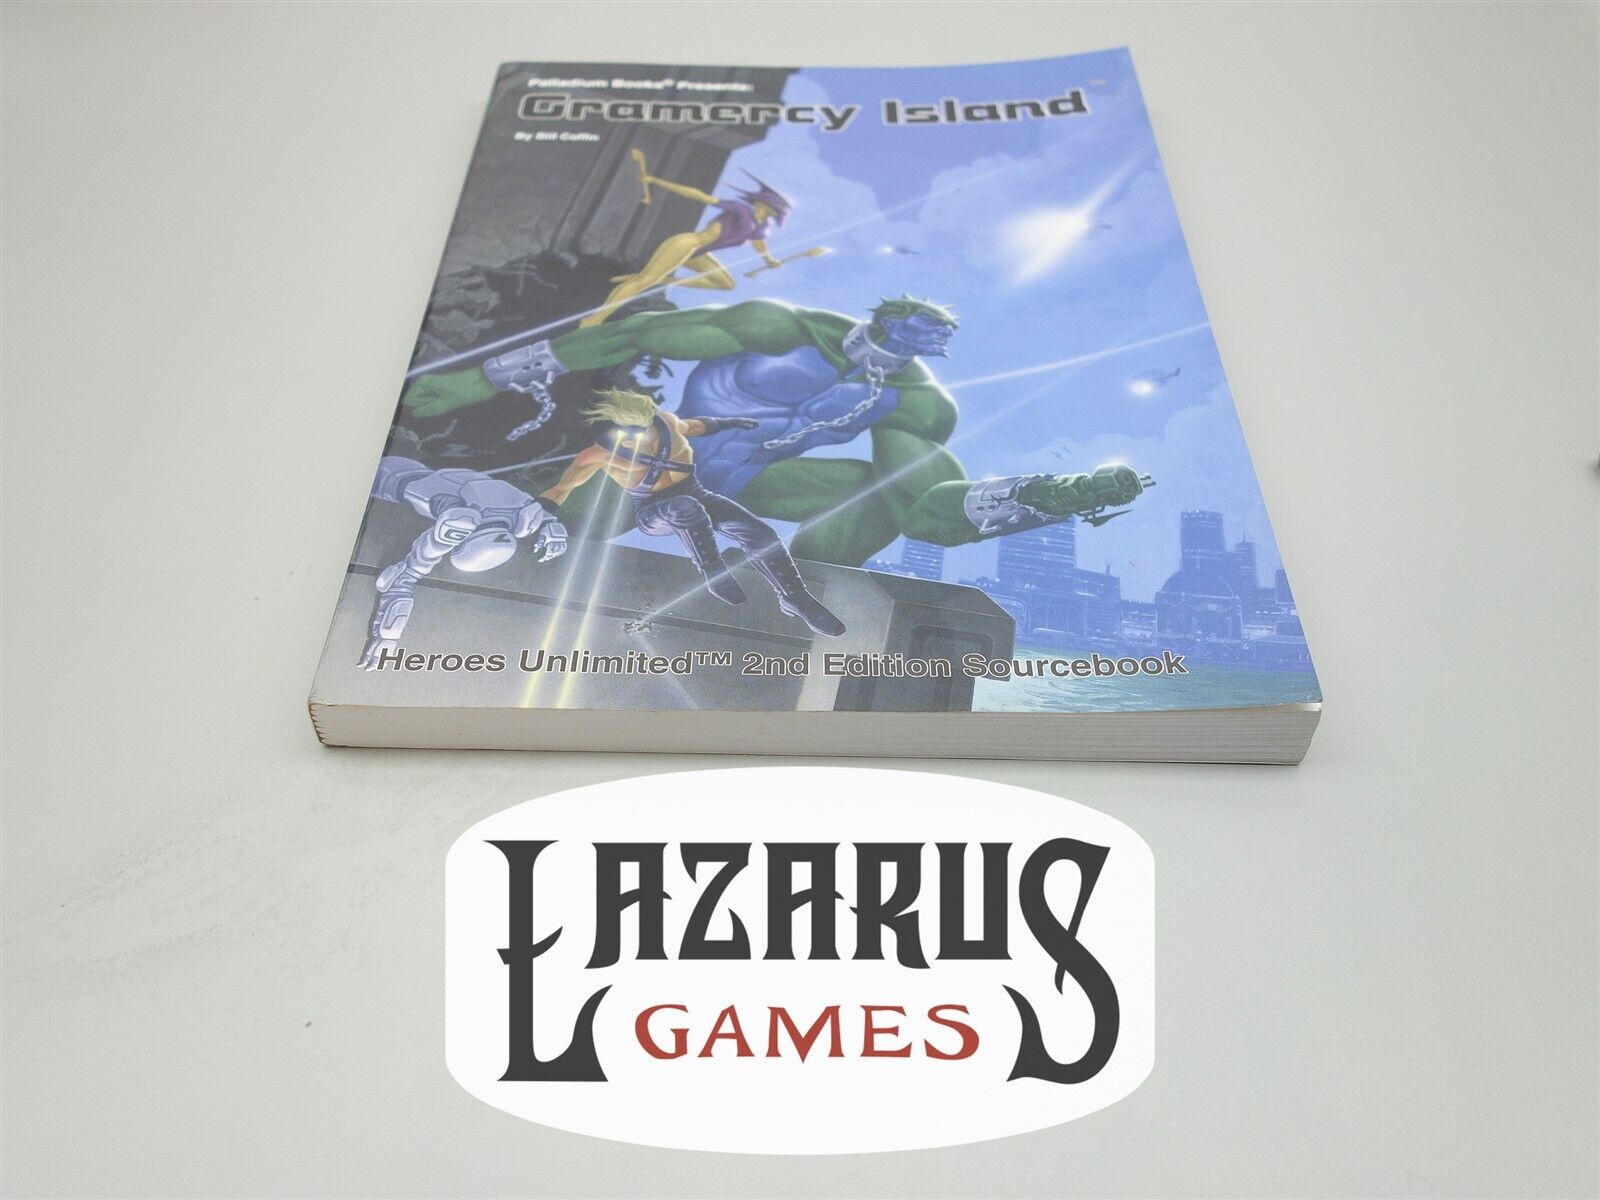 Palladium Books: Gramercy Island - A Heroes Unlimited, 2nd Edition Sourcebook